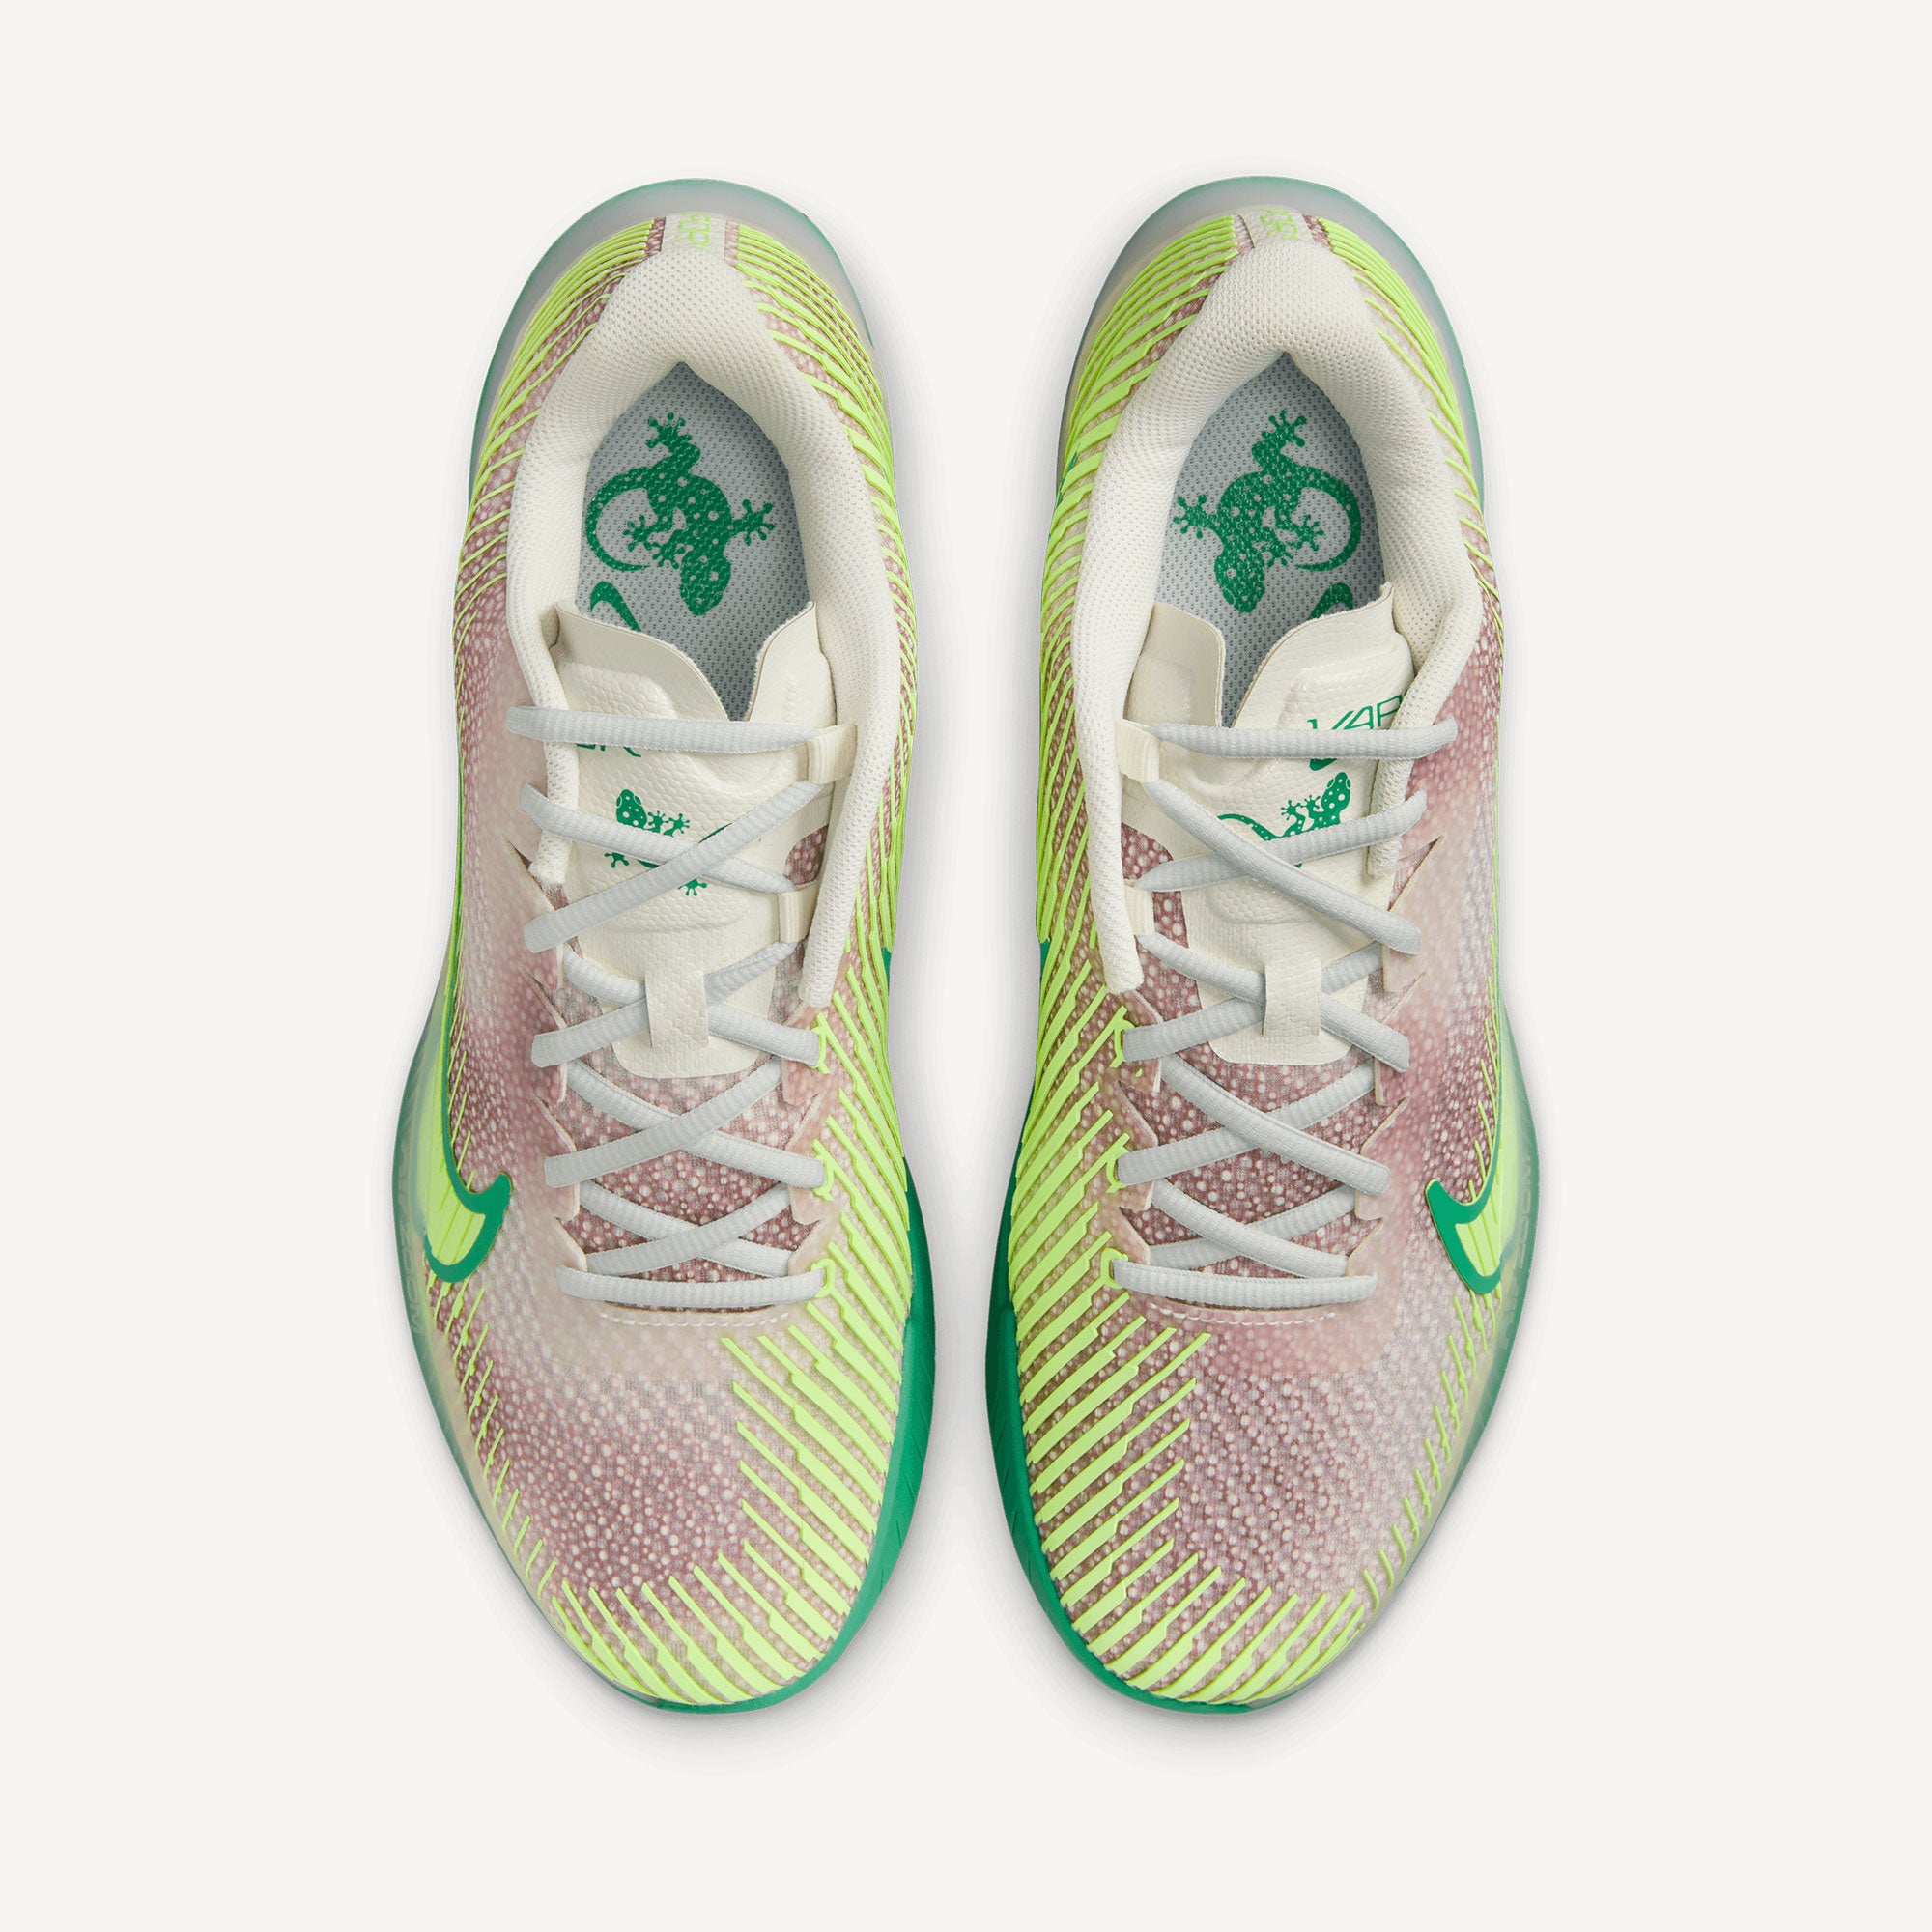 NikeCourt Air Zoom Vapor 11 Premium Men's Hard Court Tennis Shoes - Grey (6)